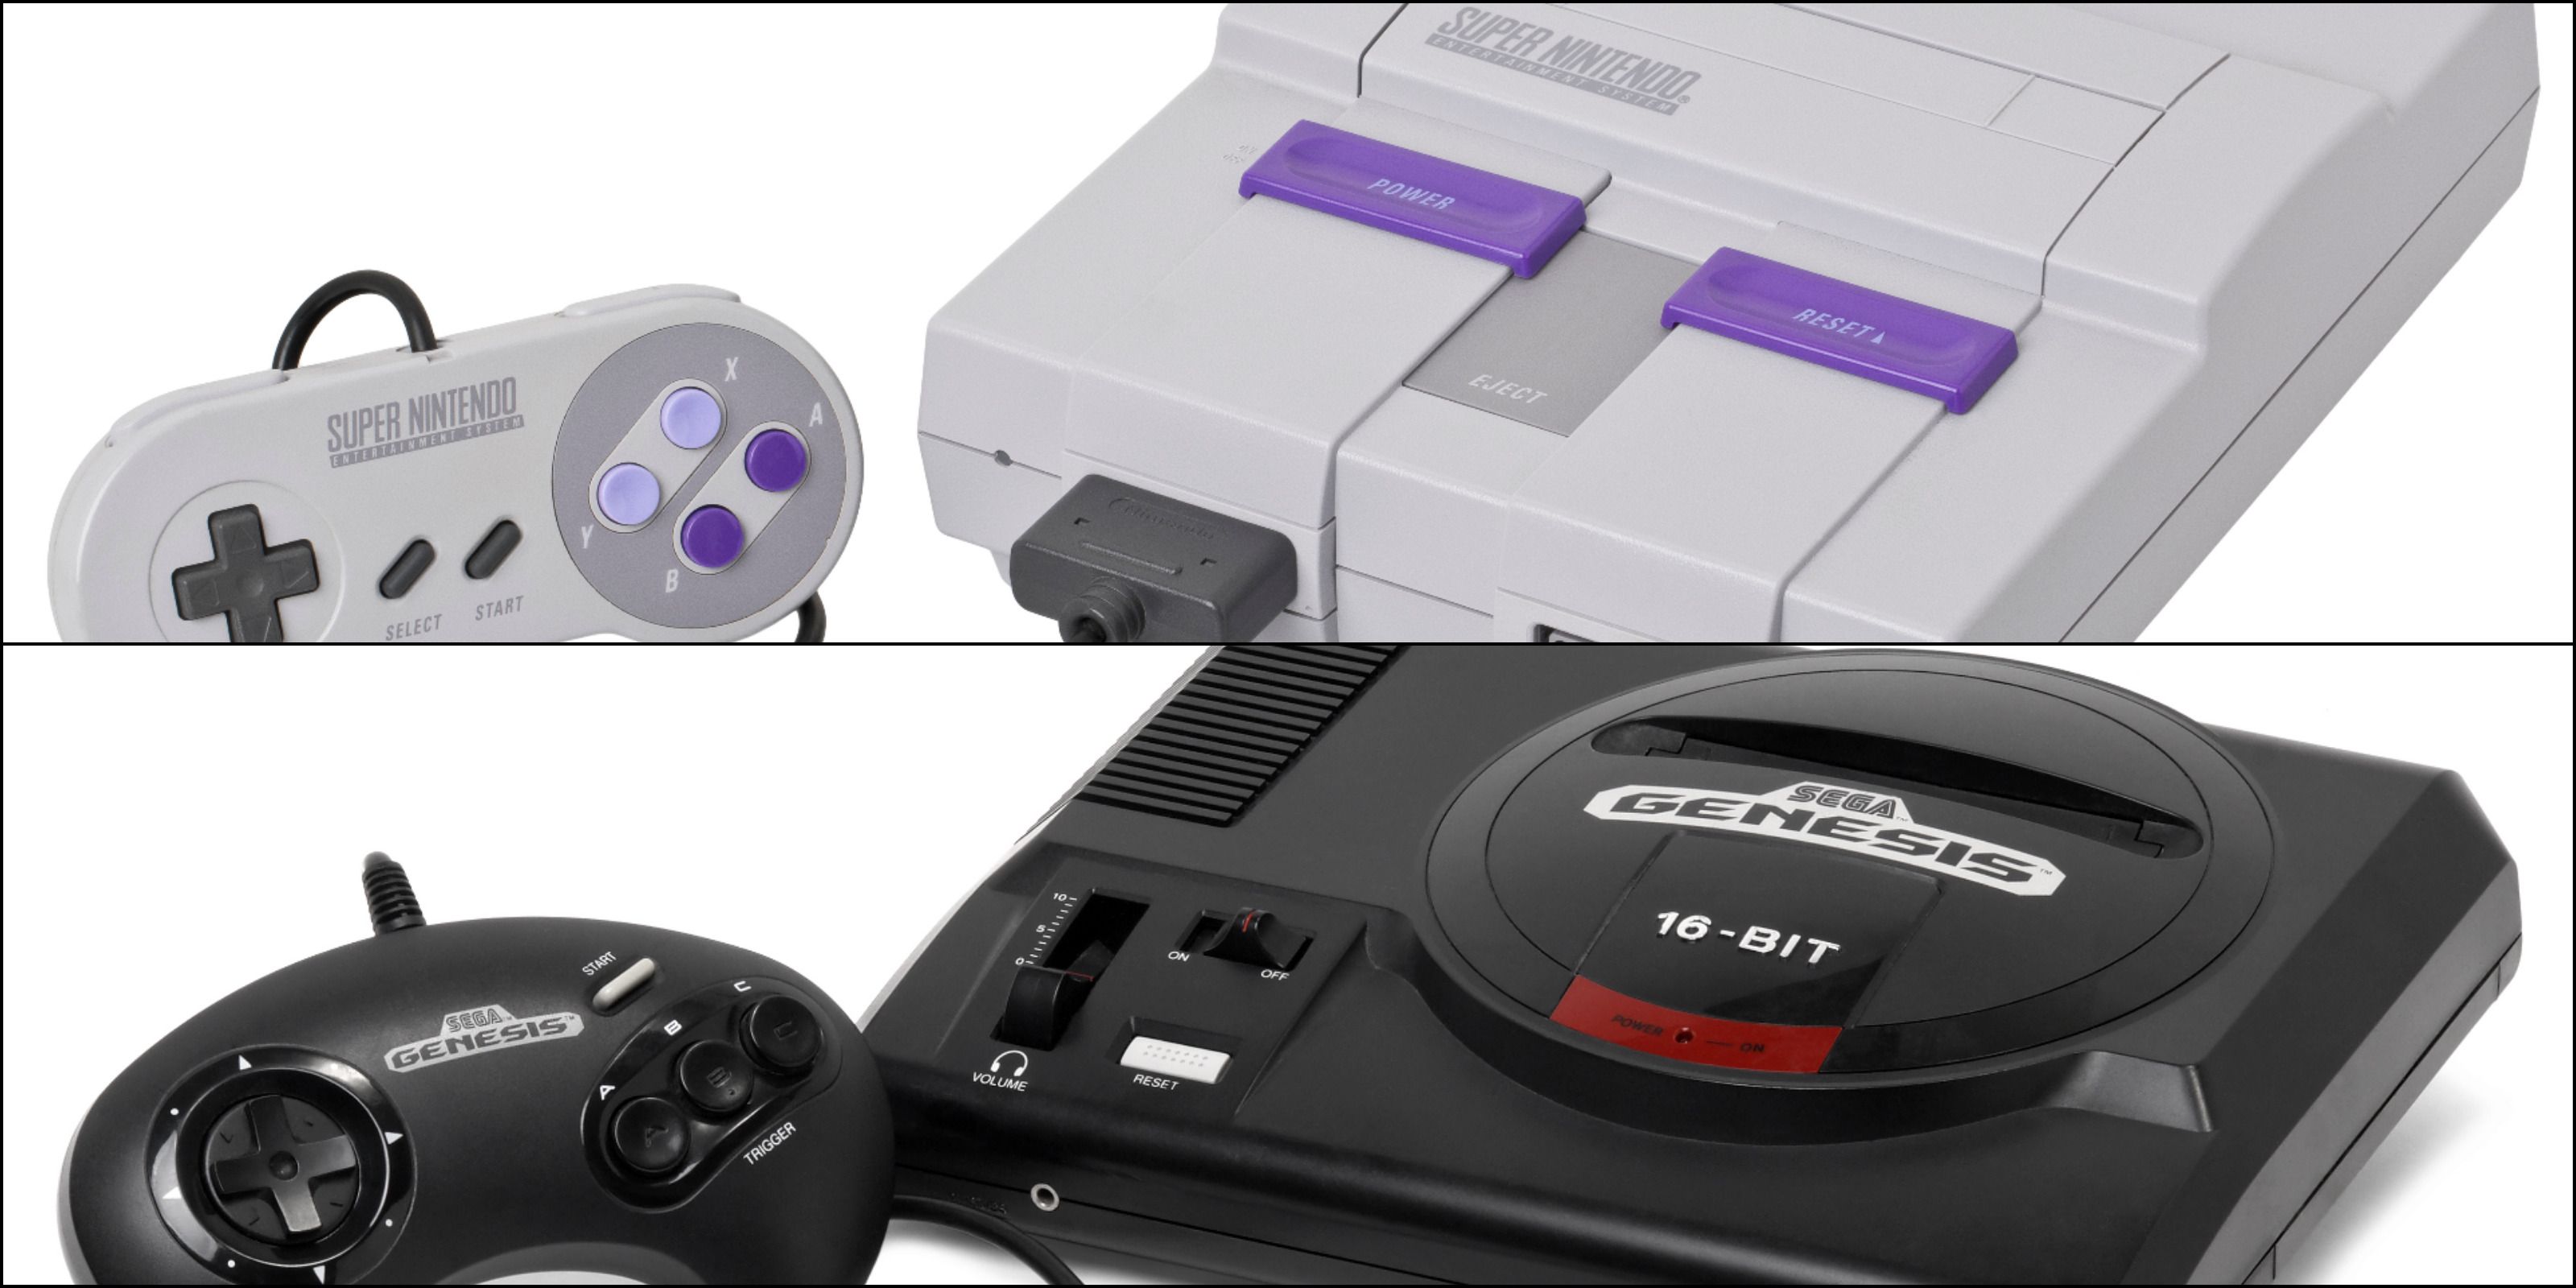 A split image depicts the Super Nintendo and Sega Genesis consoles.